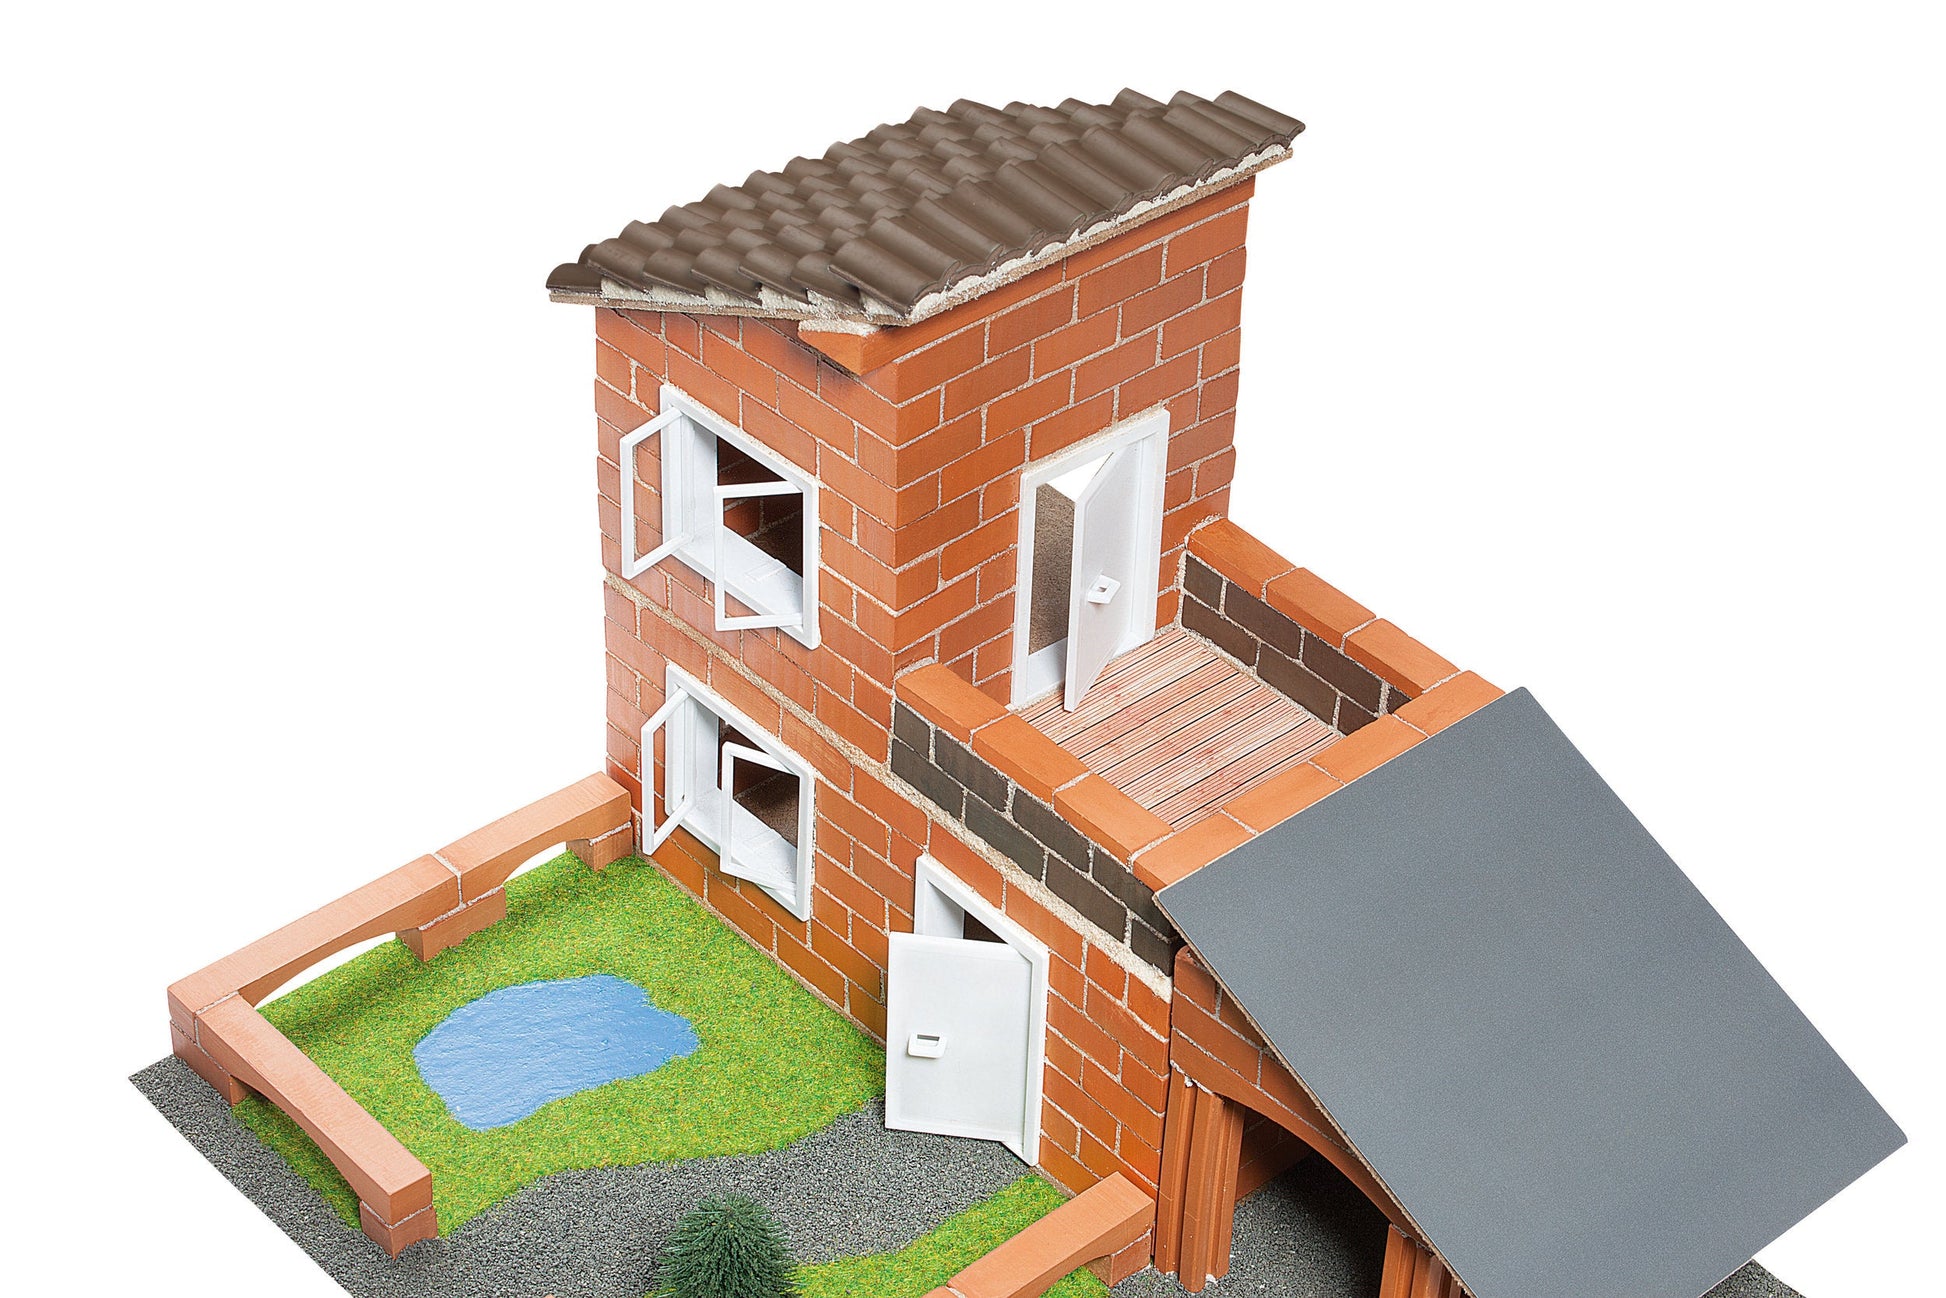 Teifoc Villa with Garage Brick Construction Set, 330+ Building Blocks,  Erector Set and STEM Building Toy